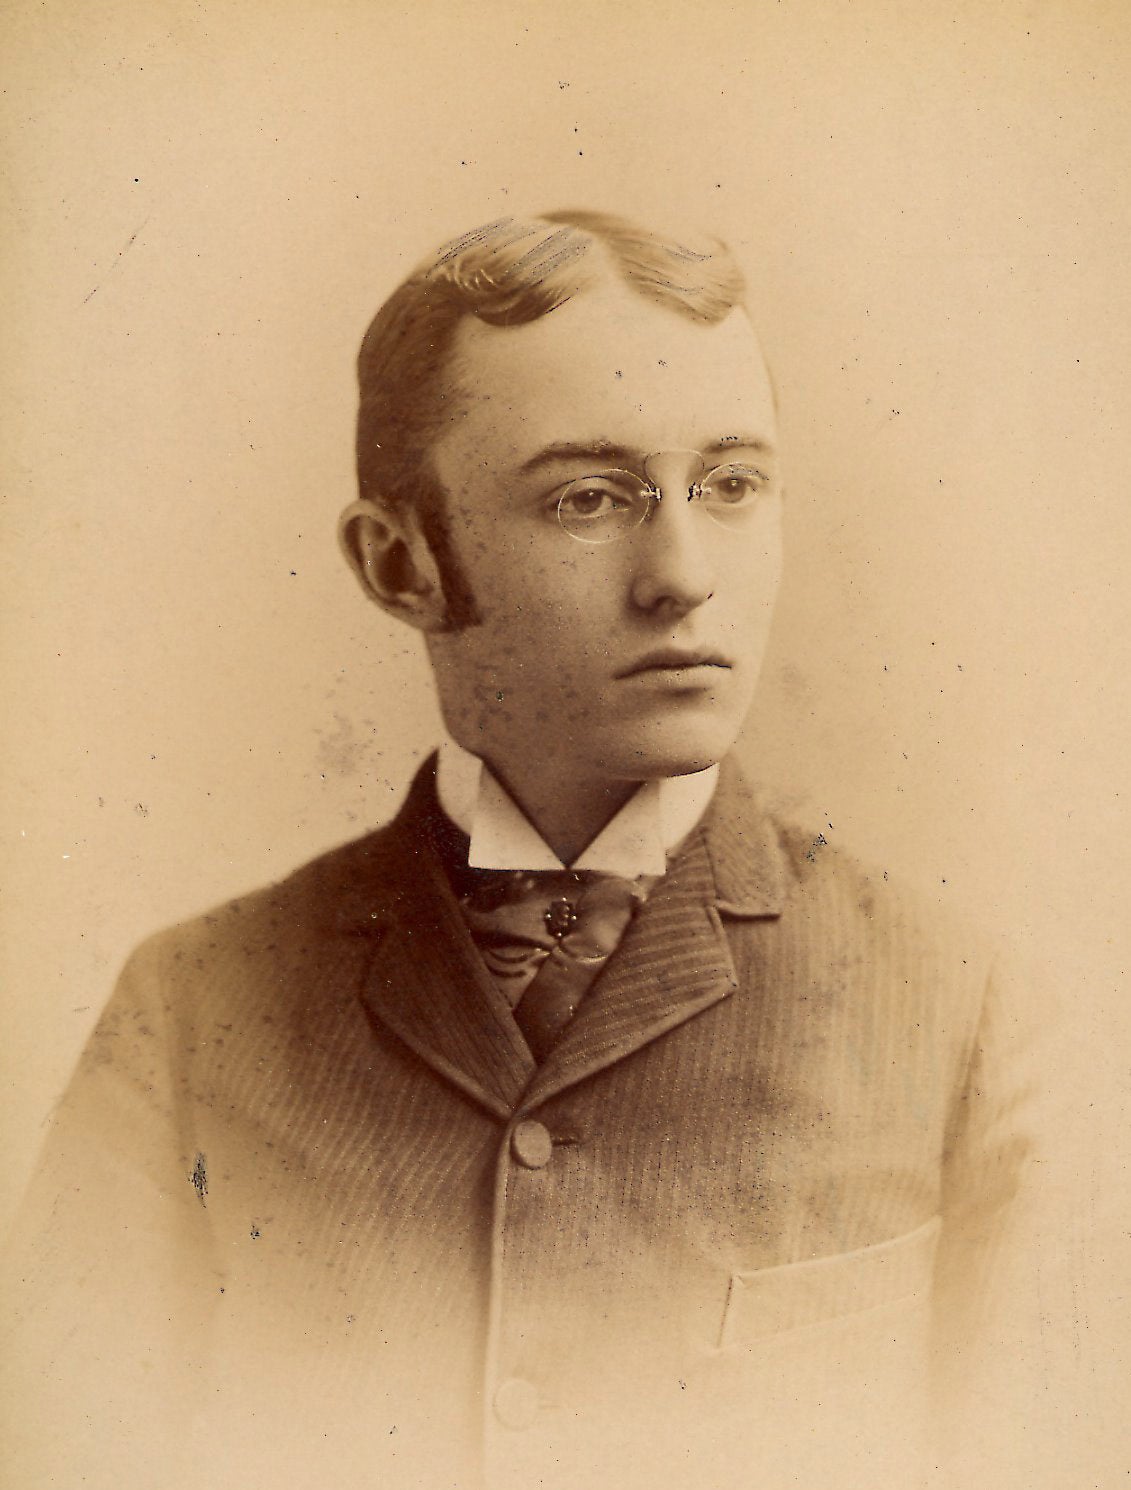 Daniel Bussier Shumway, c. 1889